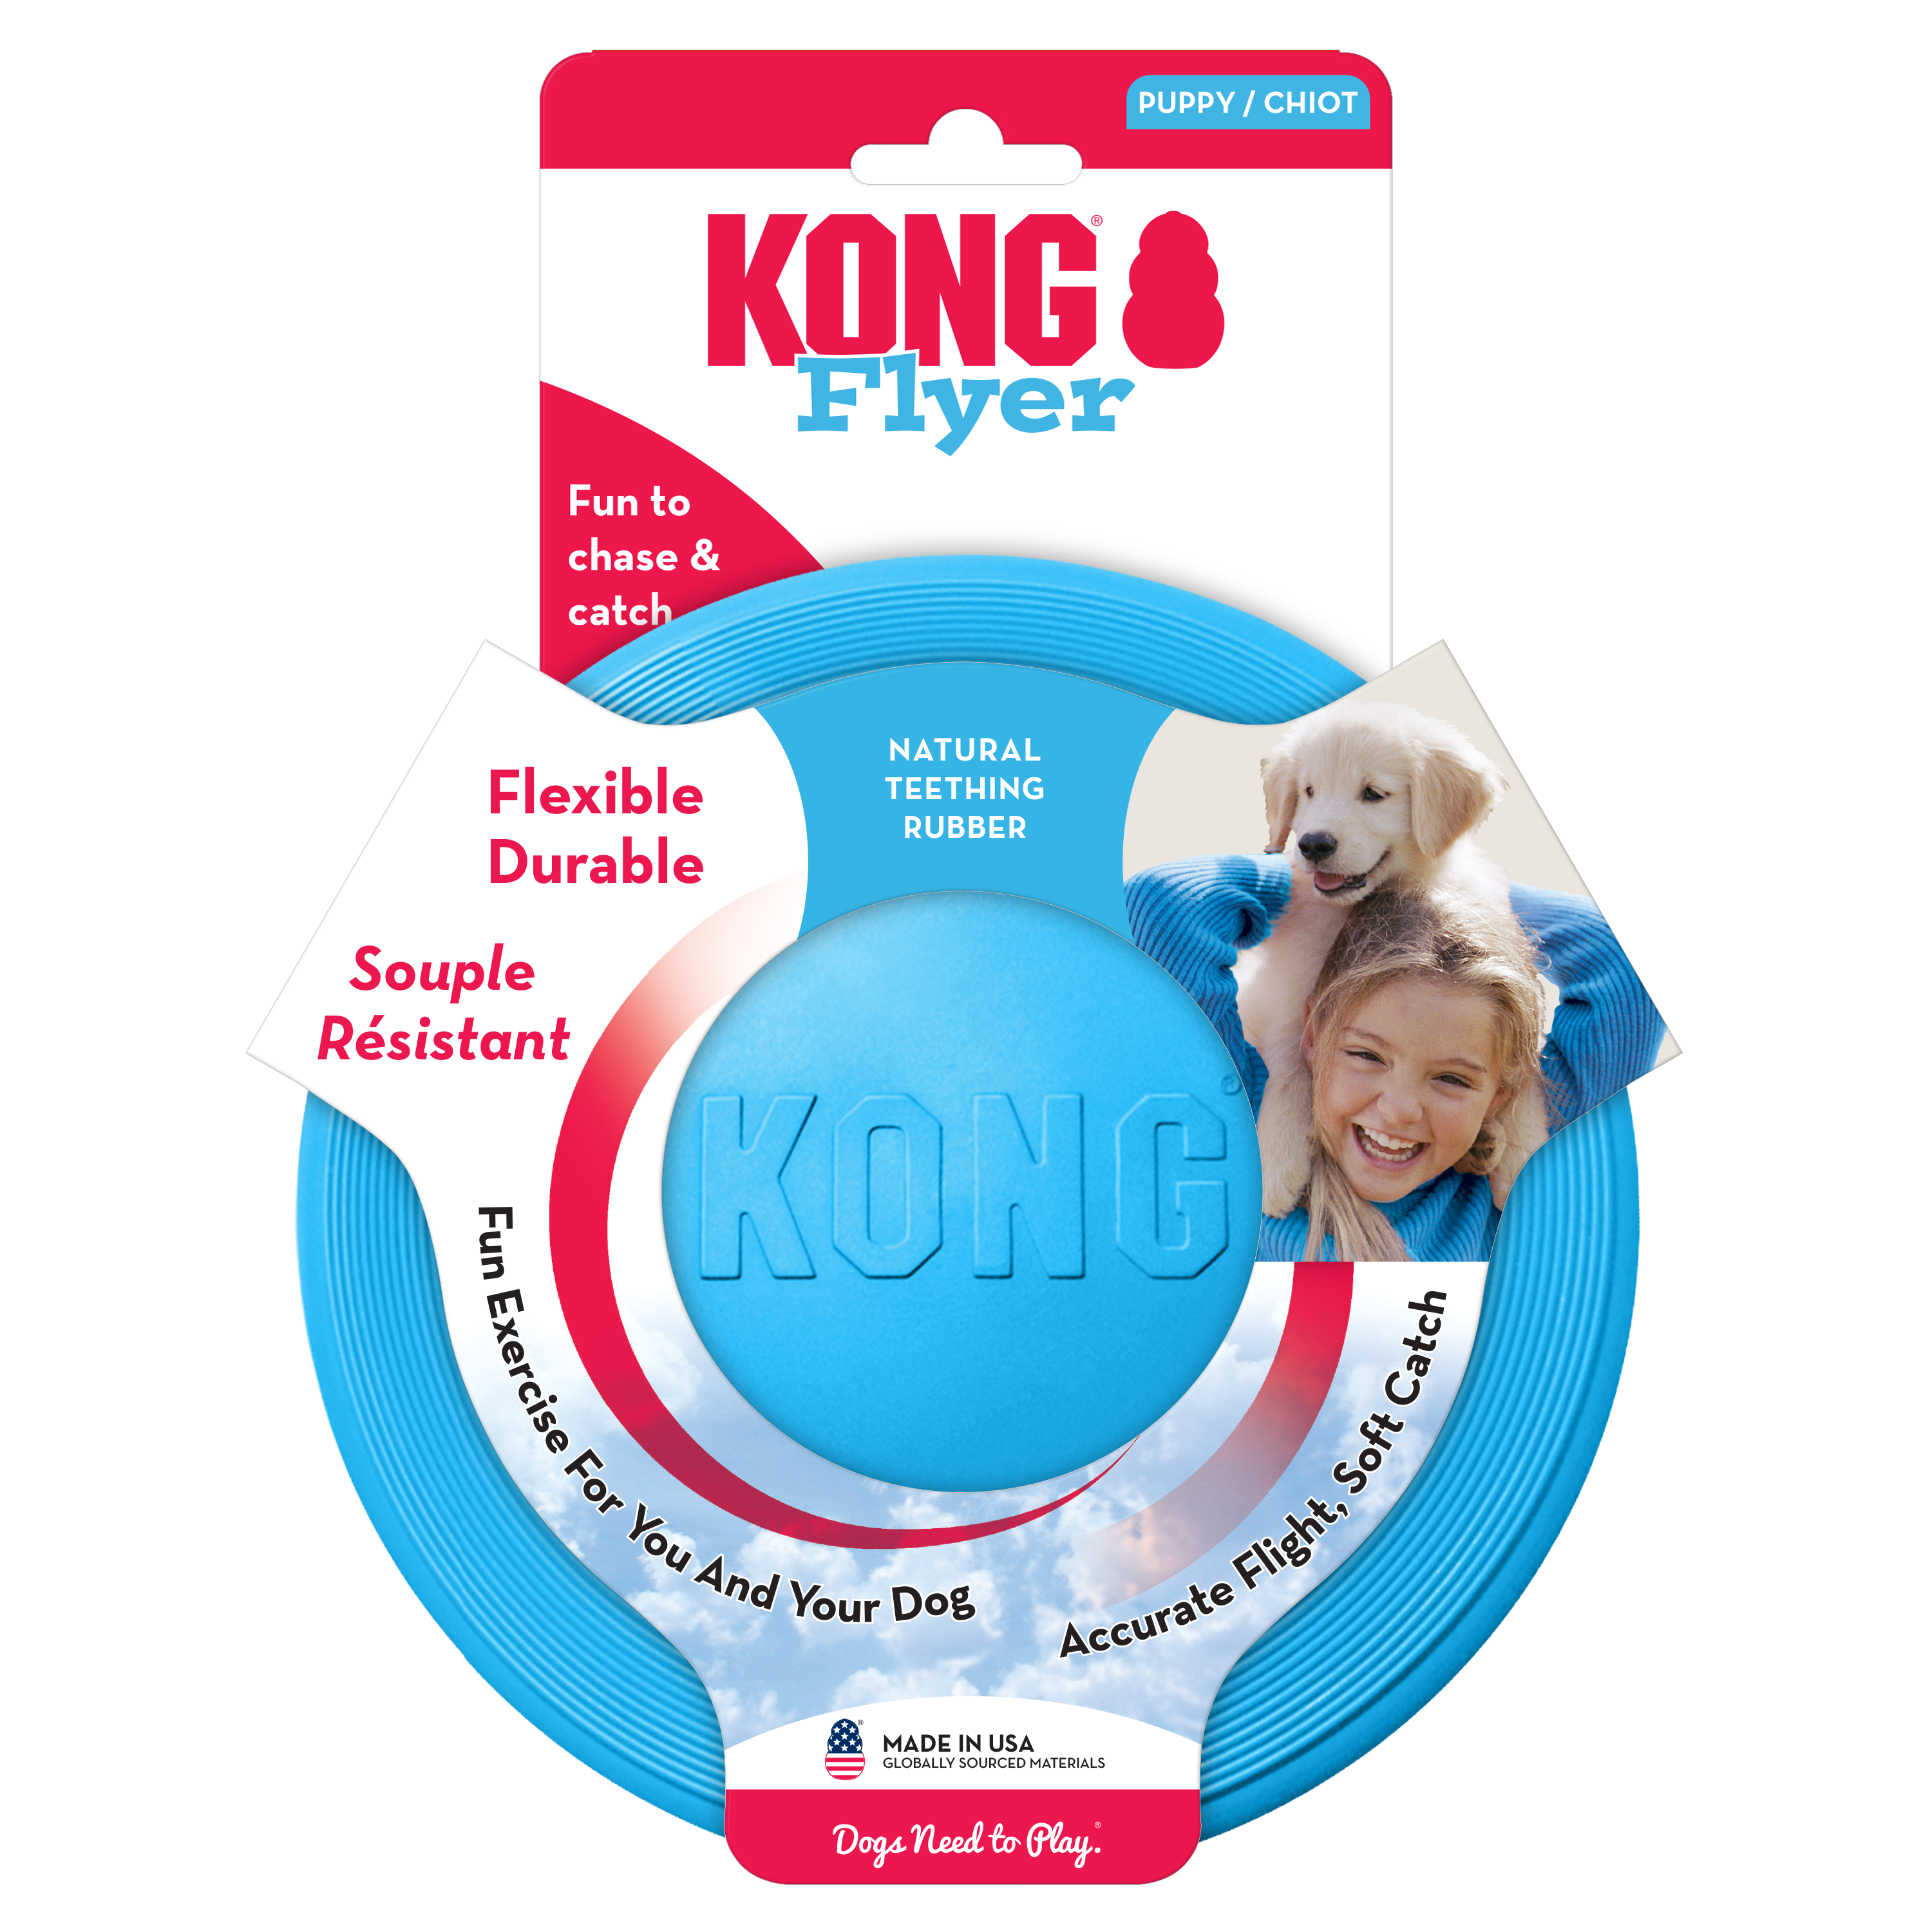 KONG Puppy Flyer onpack imagen de producto